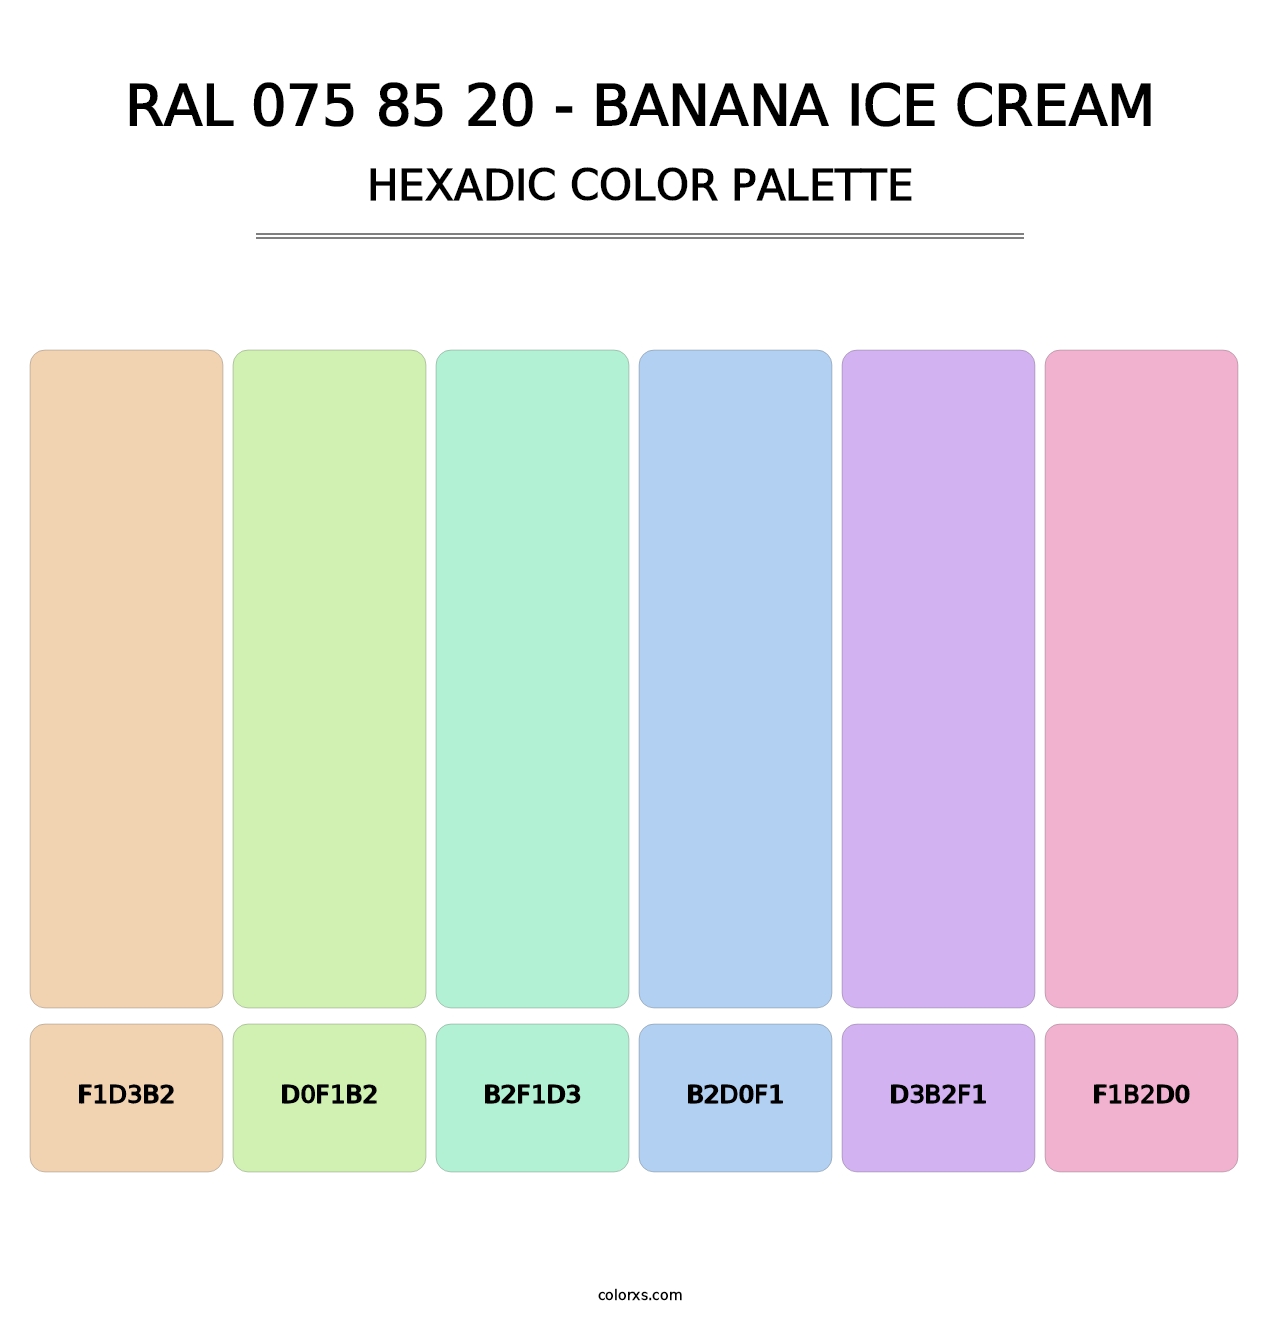 RAL 075 85 20 - Banana Ice Cream - Hexadic Color Palette